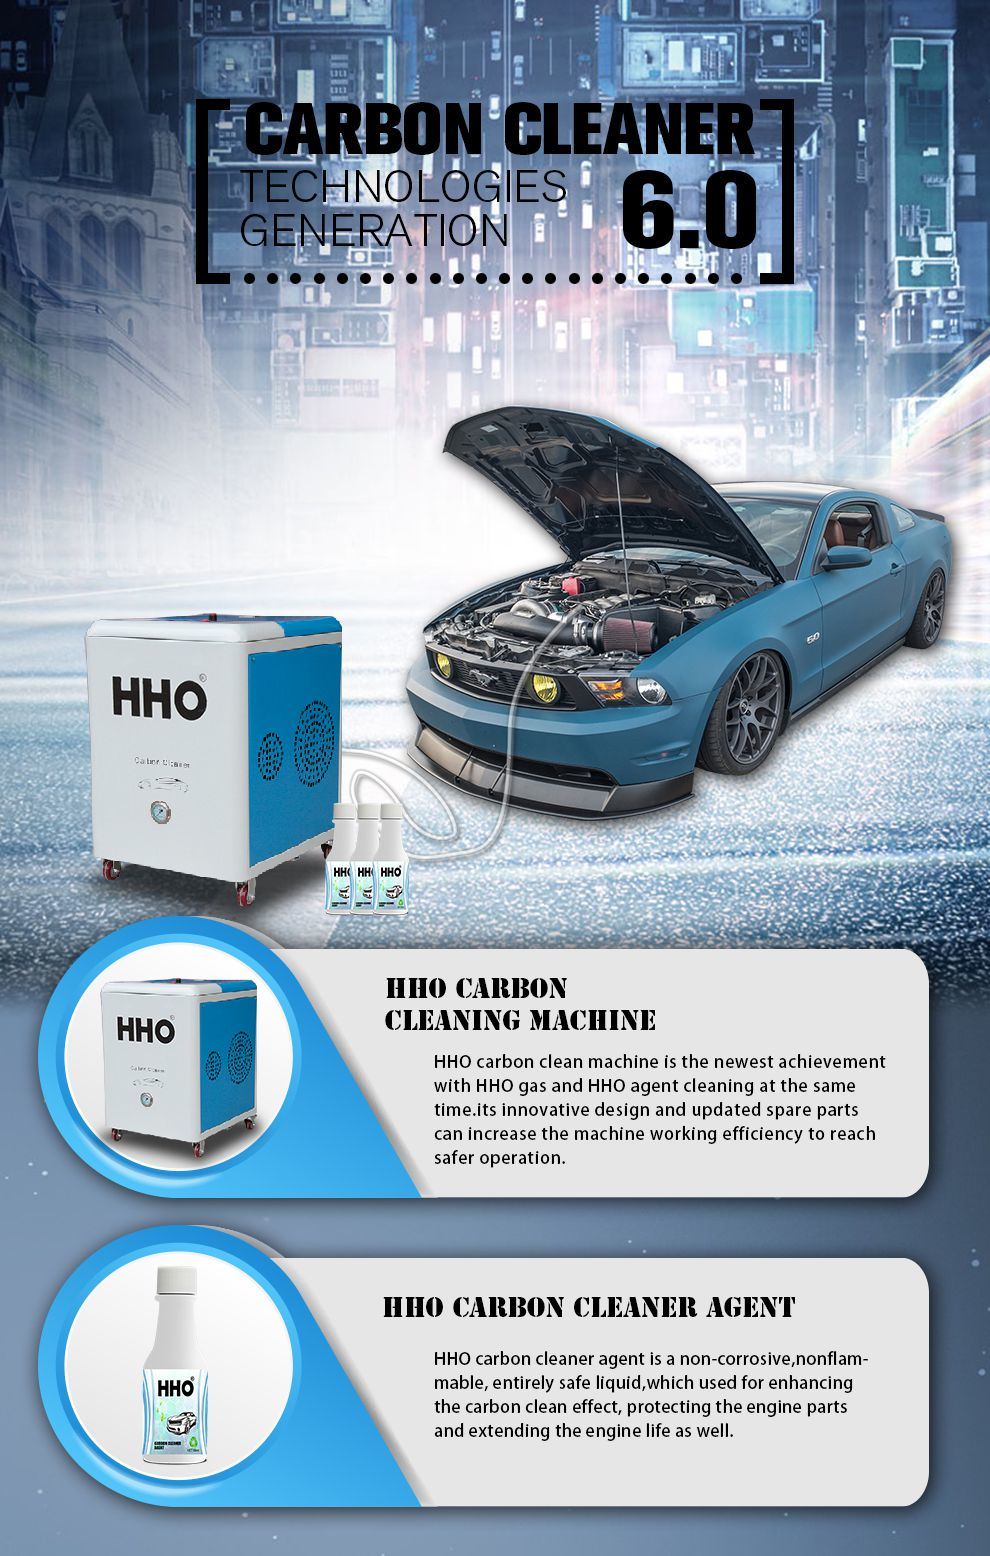 Car Engine Emissions Cleaning Equipment